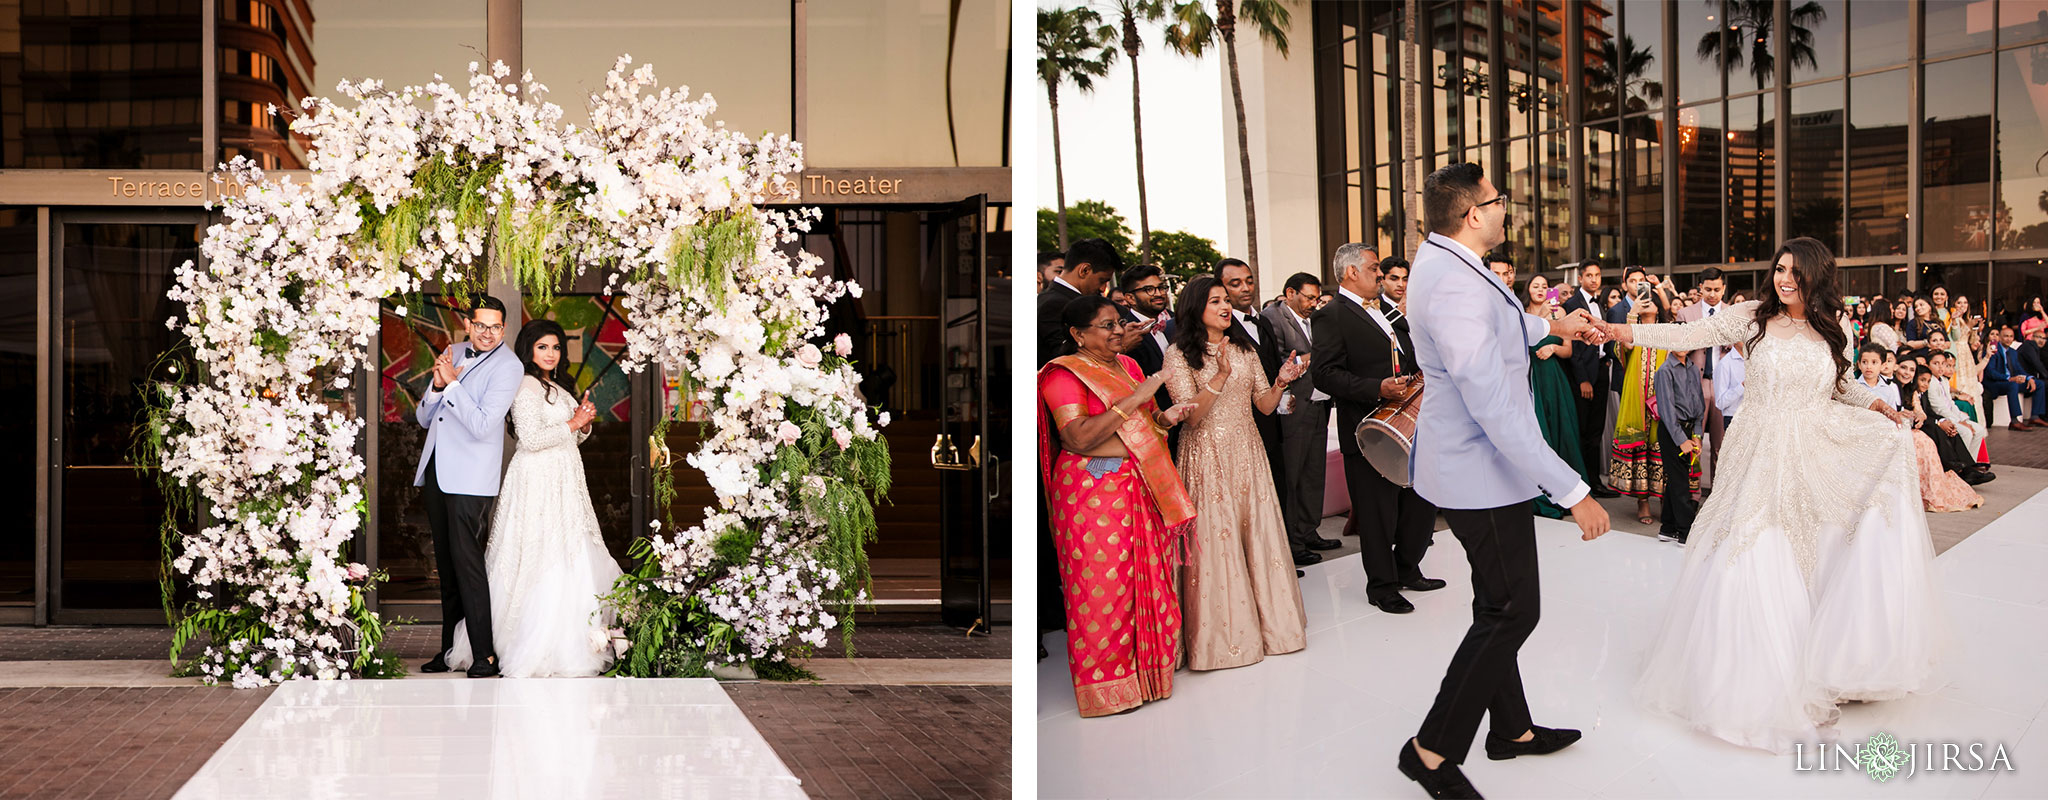 068 Long Beach Performing Arts Center Indian Wedding Reception Photography